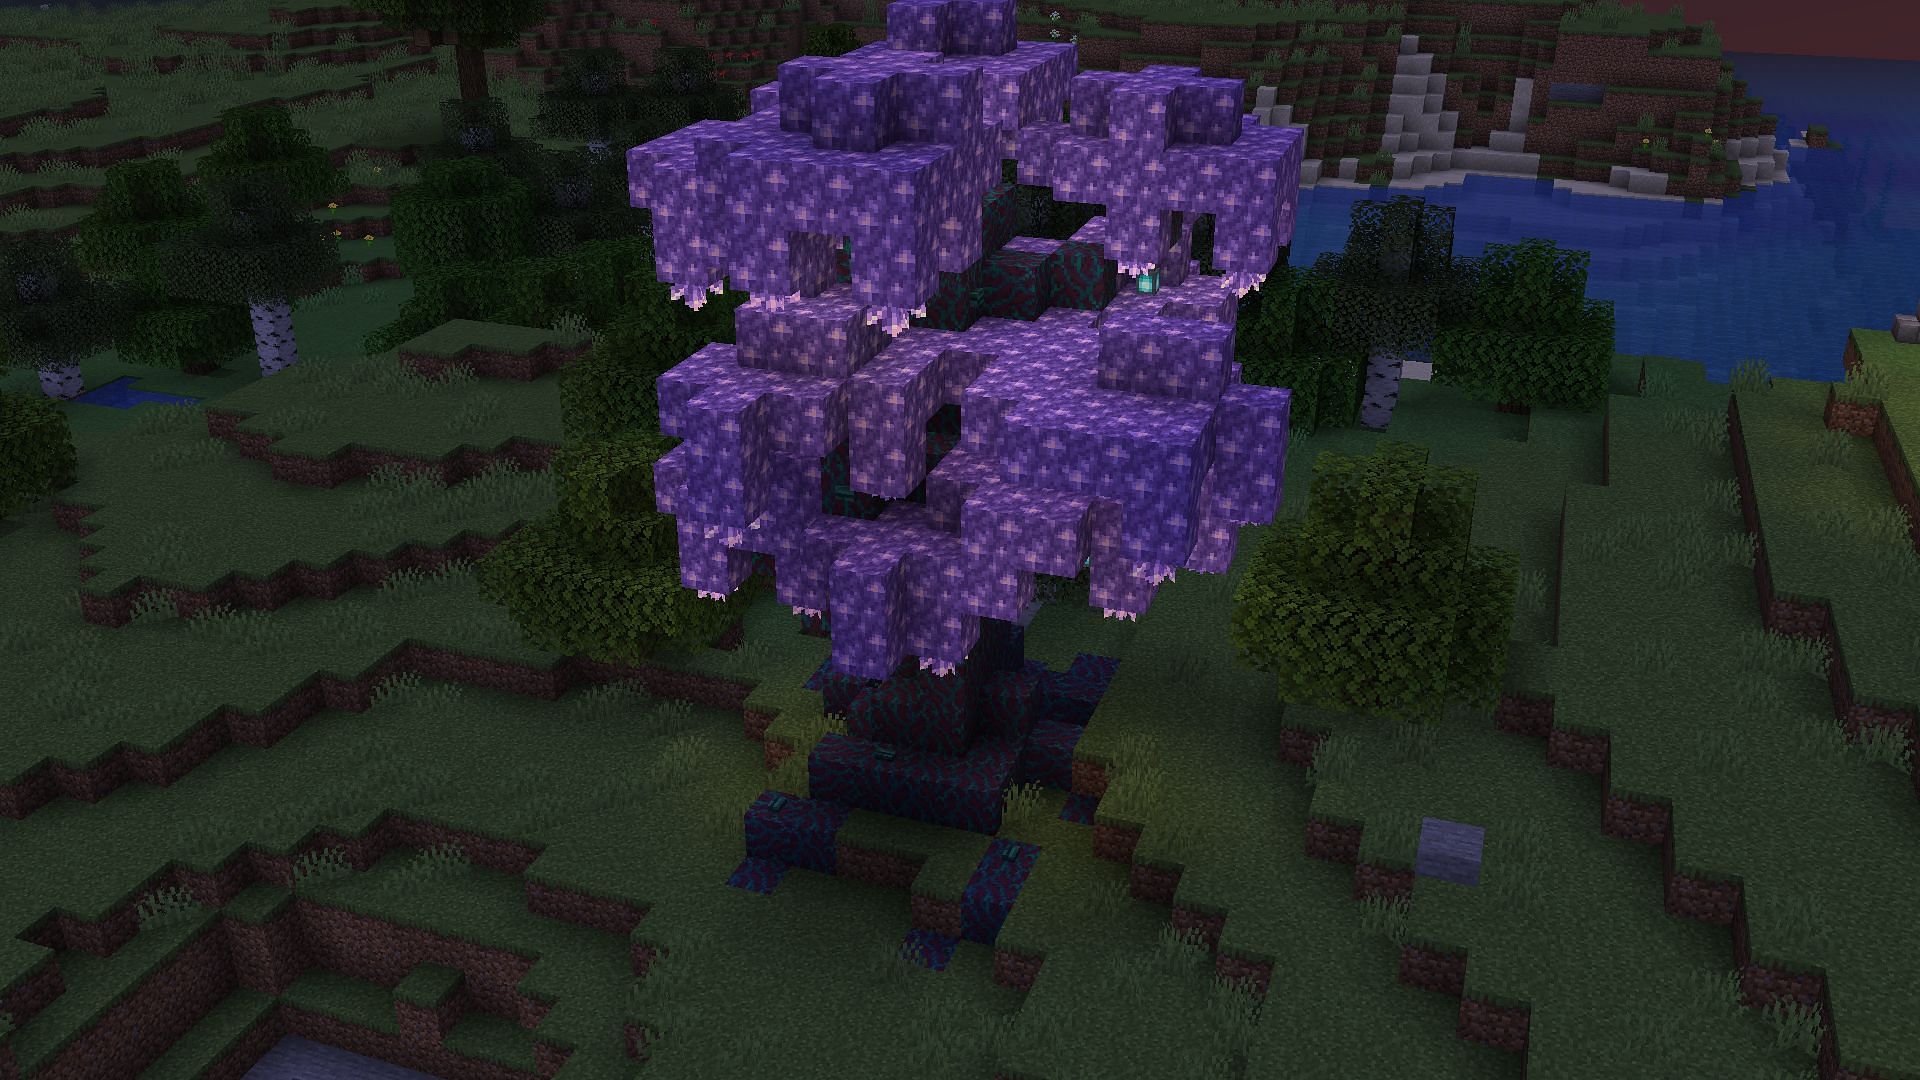 Enchanting amethyst tree (Image via u/Planetereq on Reddit)